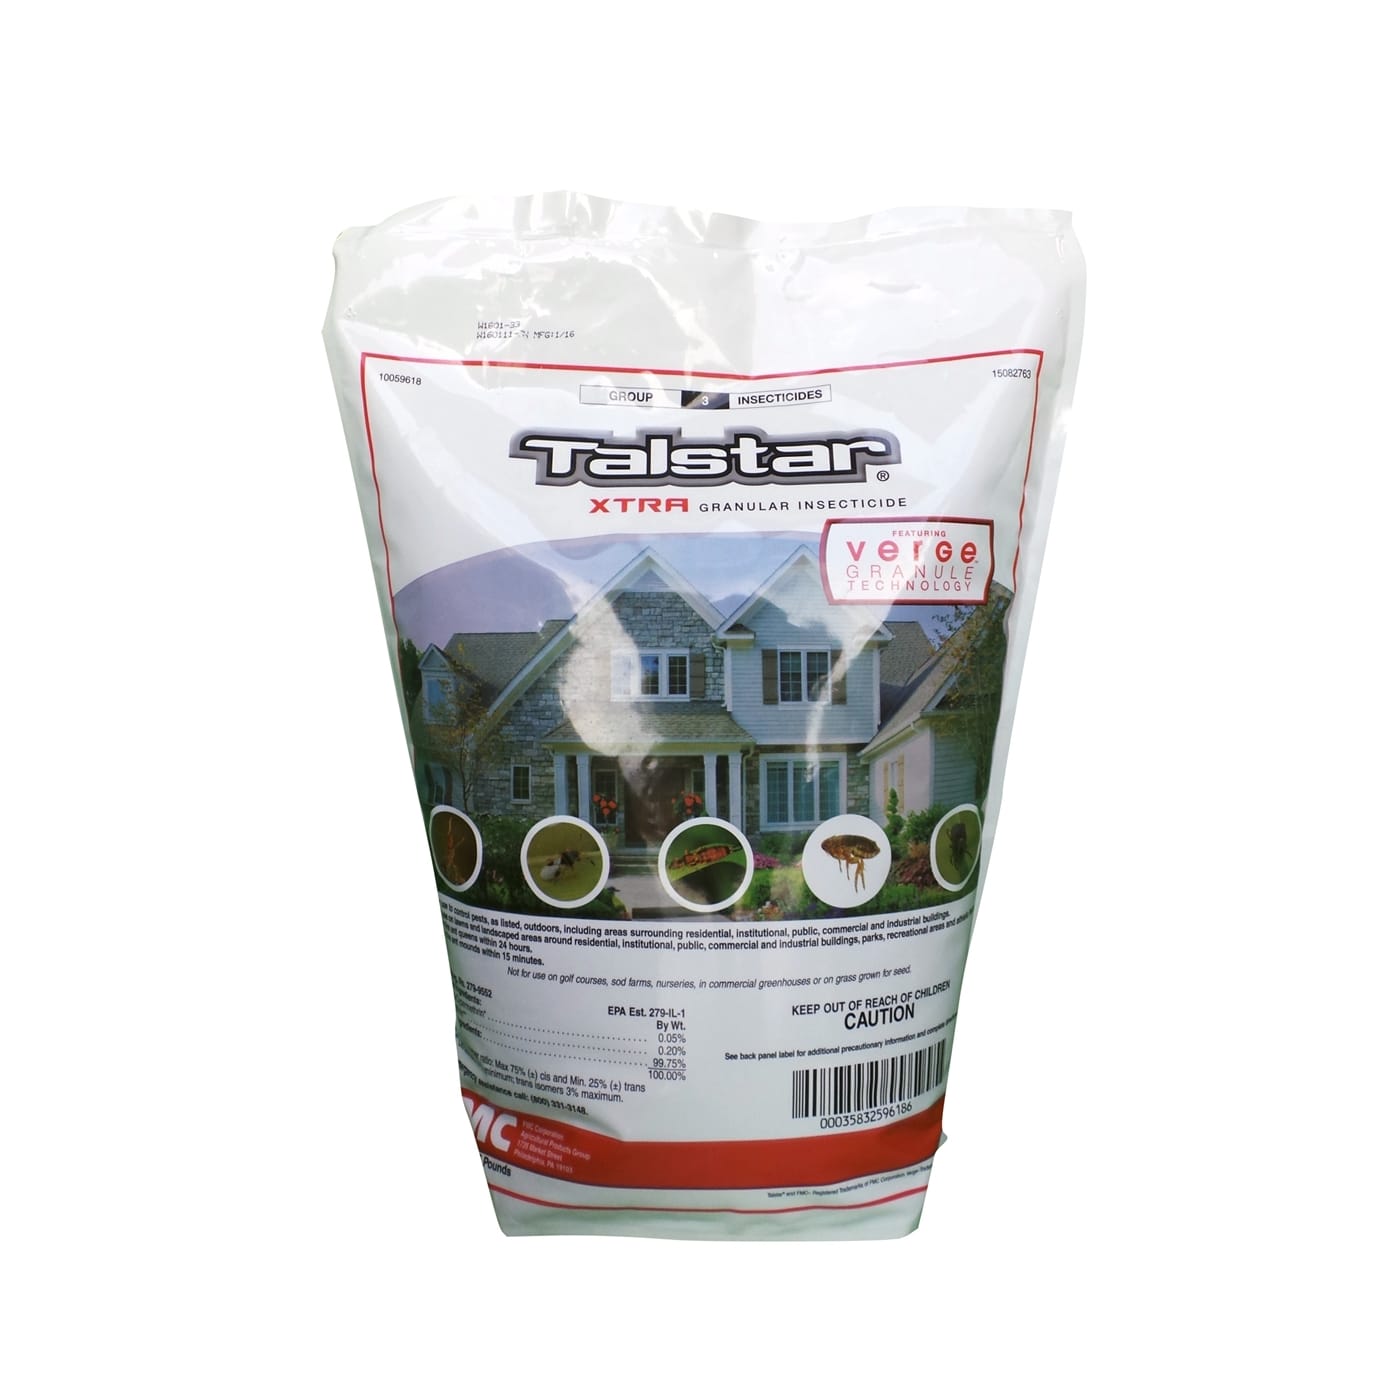 Talstar XTRA Granular Insecticide - Verge 